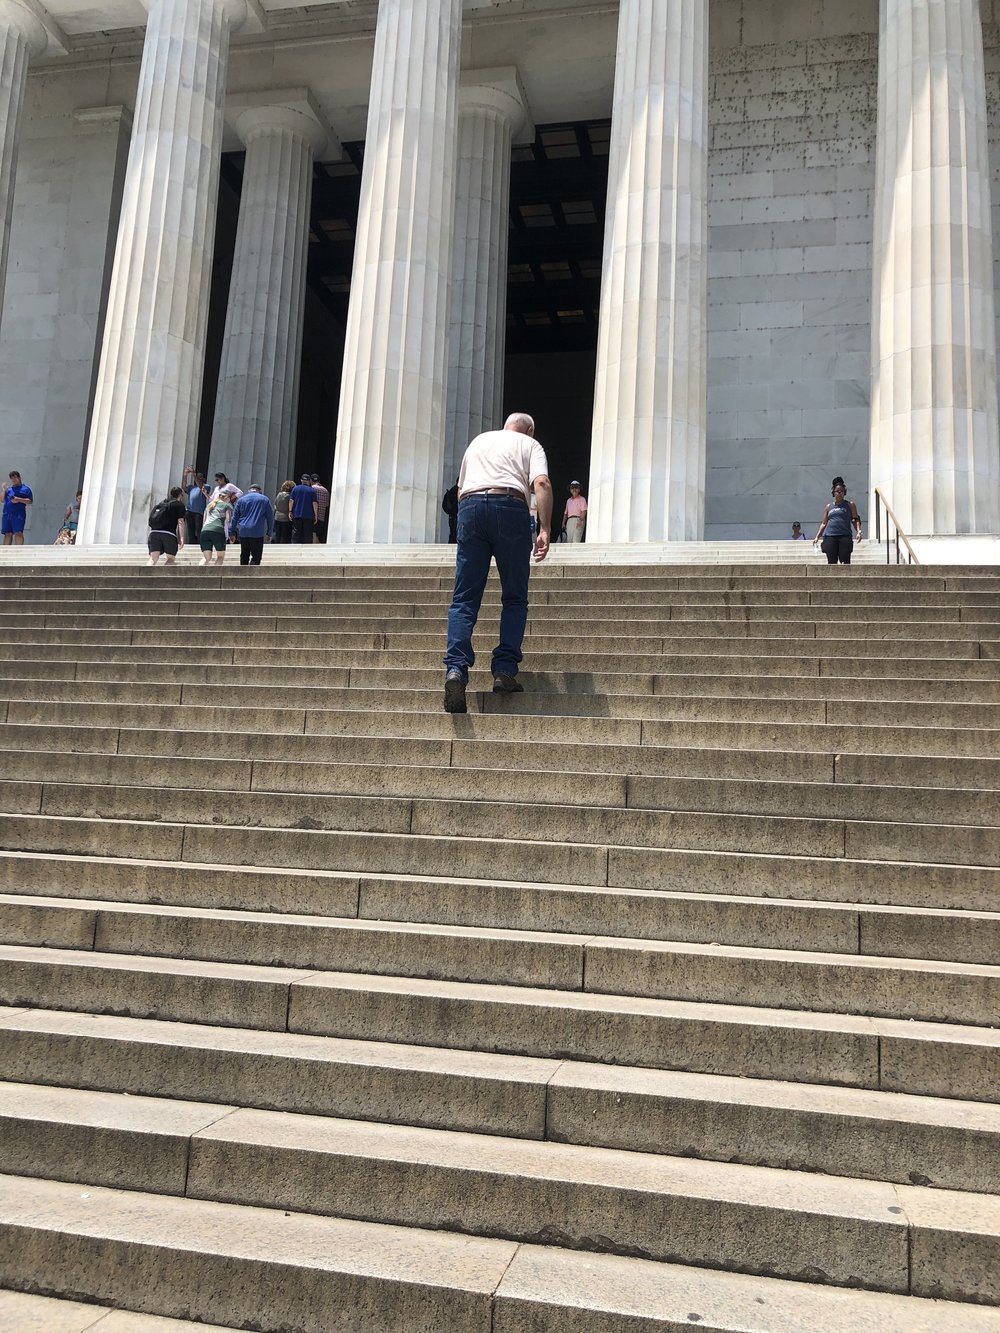 Lincoln Memorial steps (Randy climbing them).